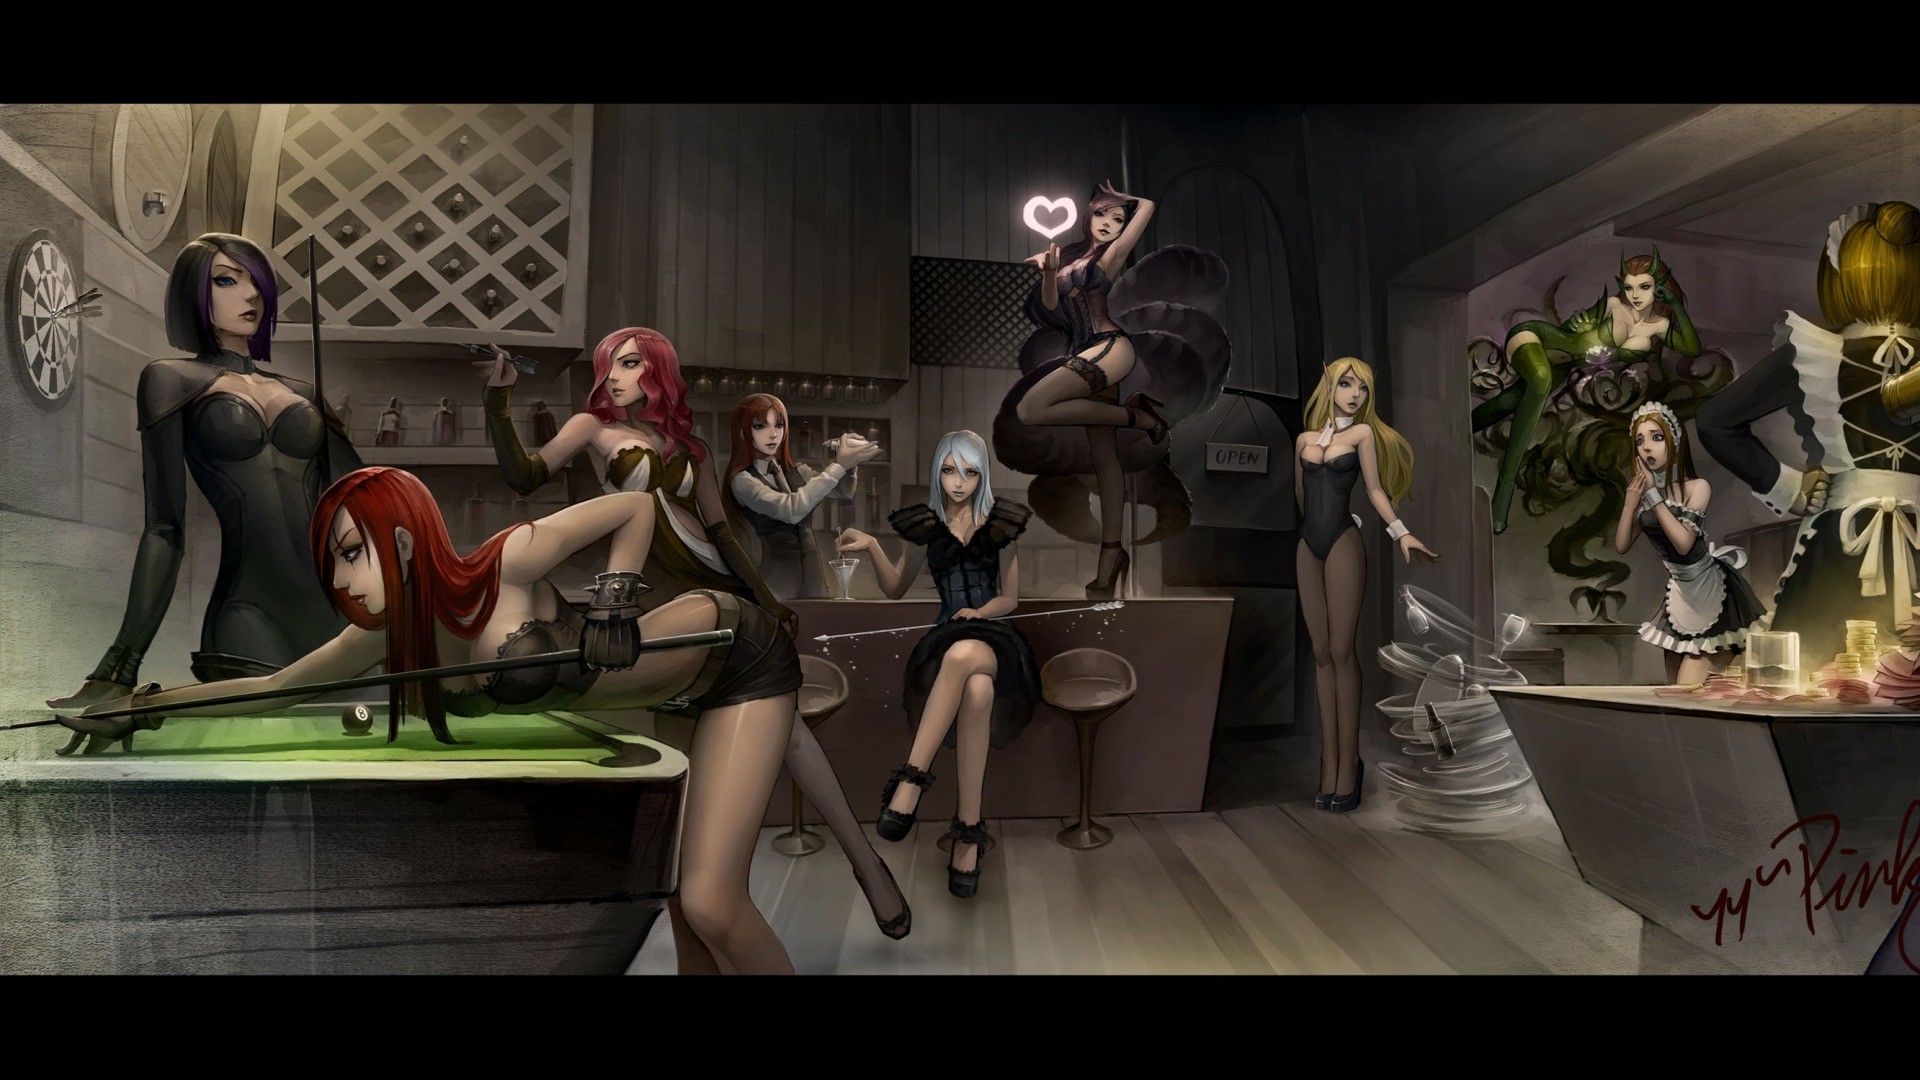 bars, Groups Of Girls, Comic Art, League Of Legends Wallpaper